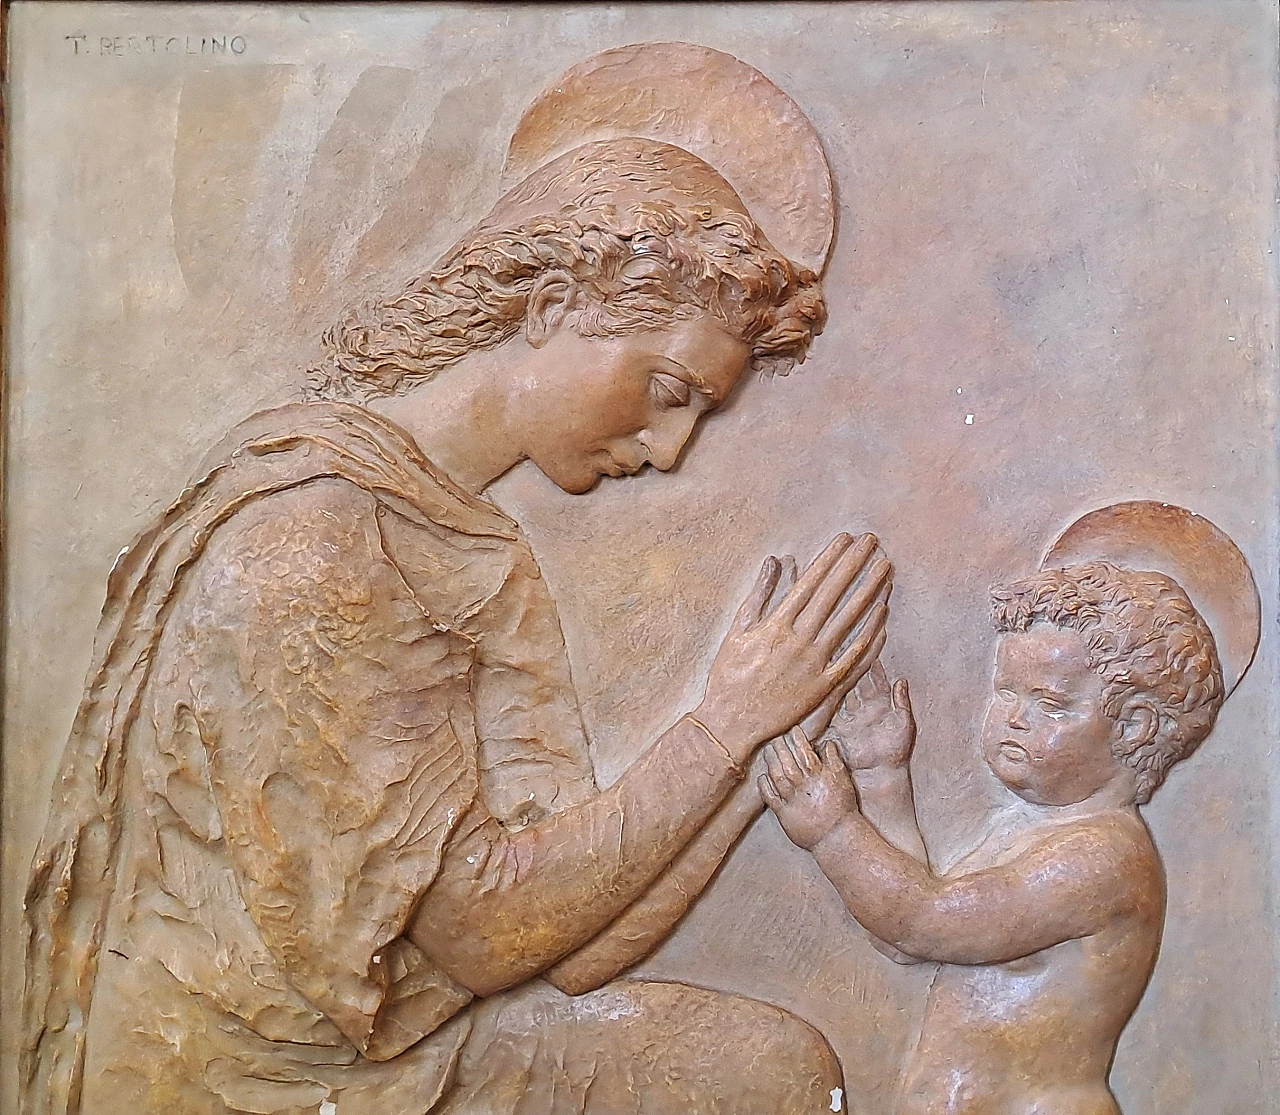 T. Bertolino, Madonna and Child, plaster bas-relief, 1940s 2